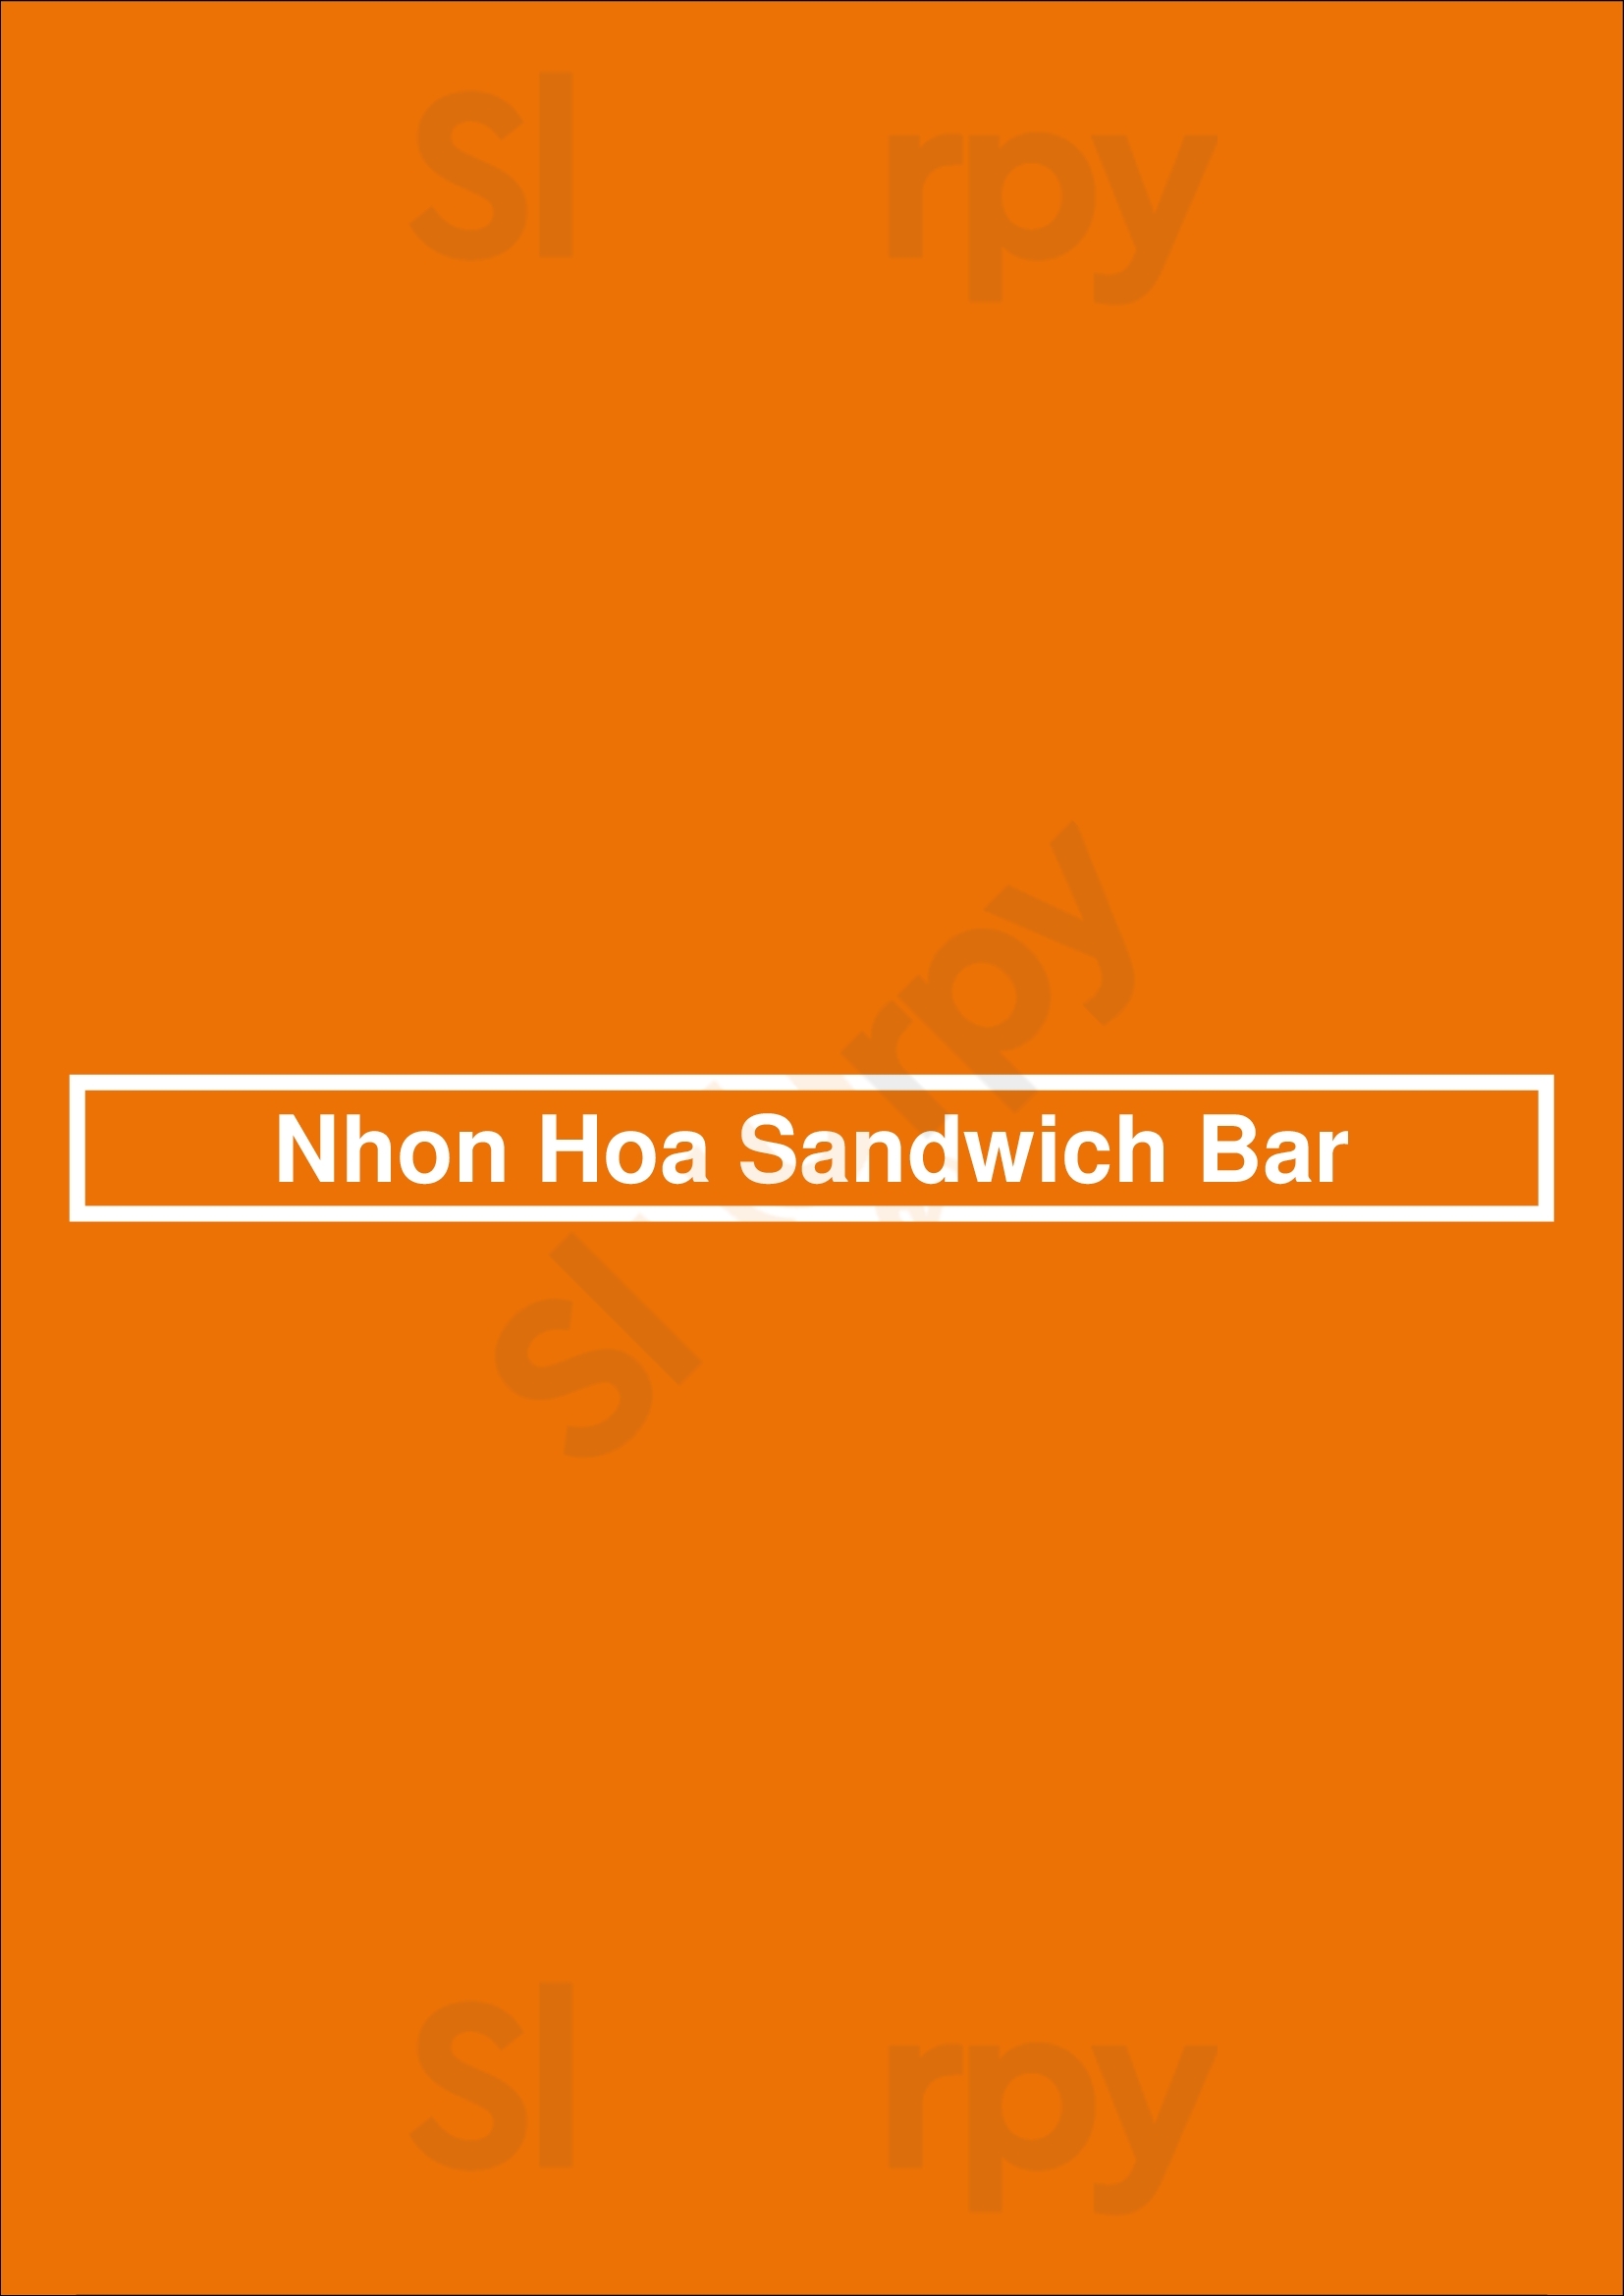 Nhon Hoa Sandwich Bar Edmonton Menu - 1